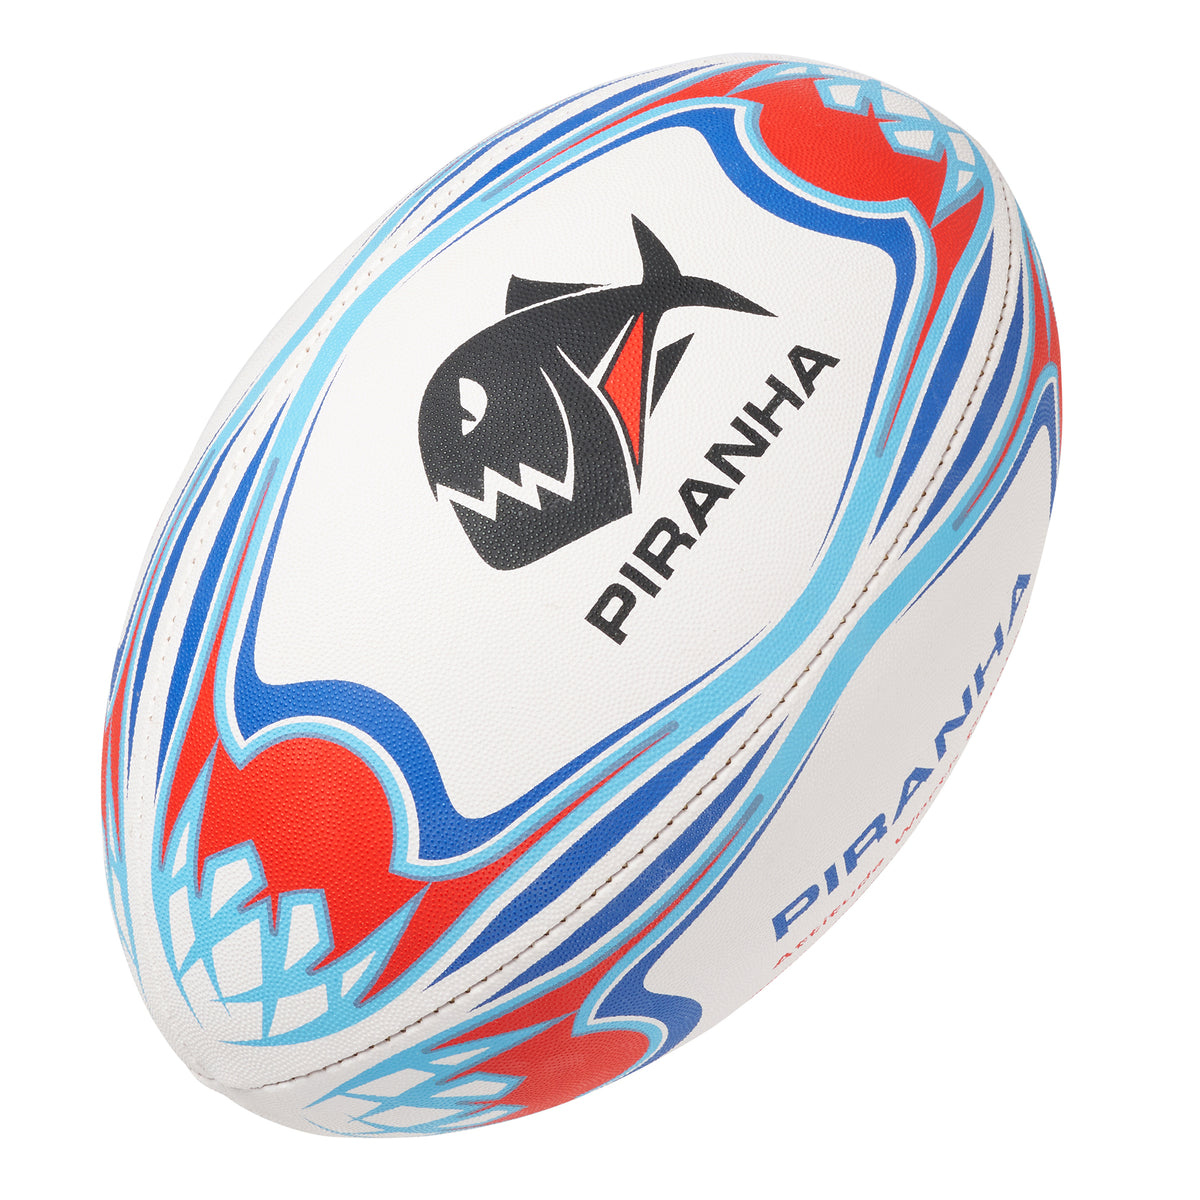 Piranha Cariba Rugby Ball